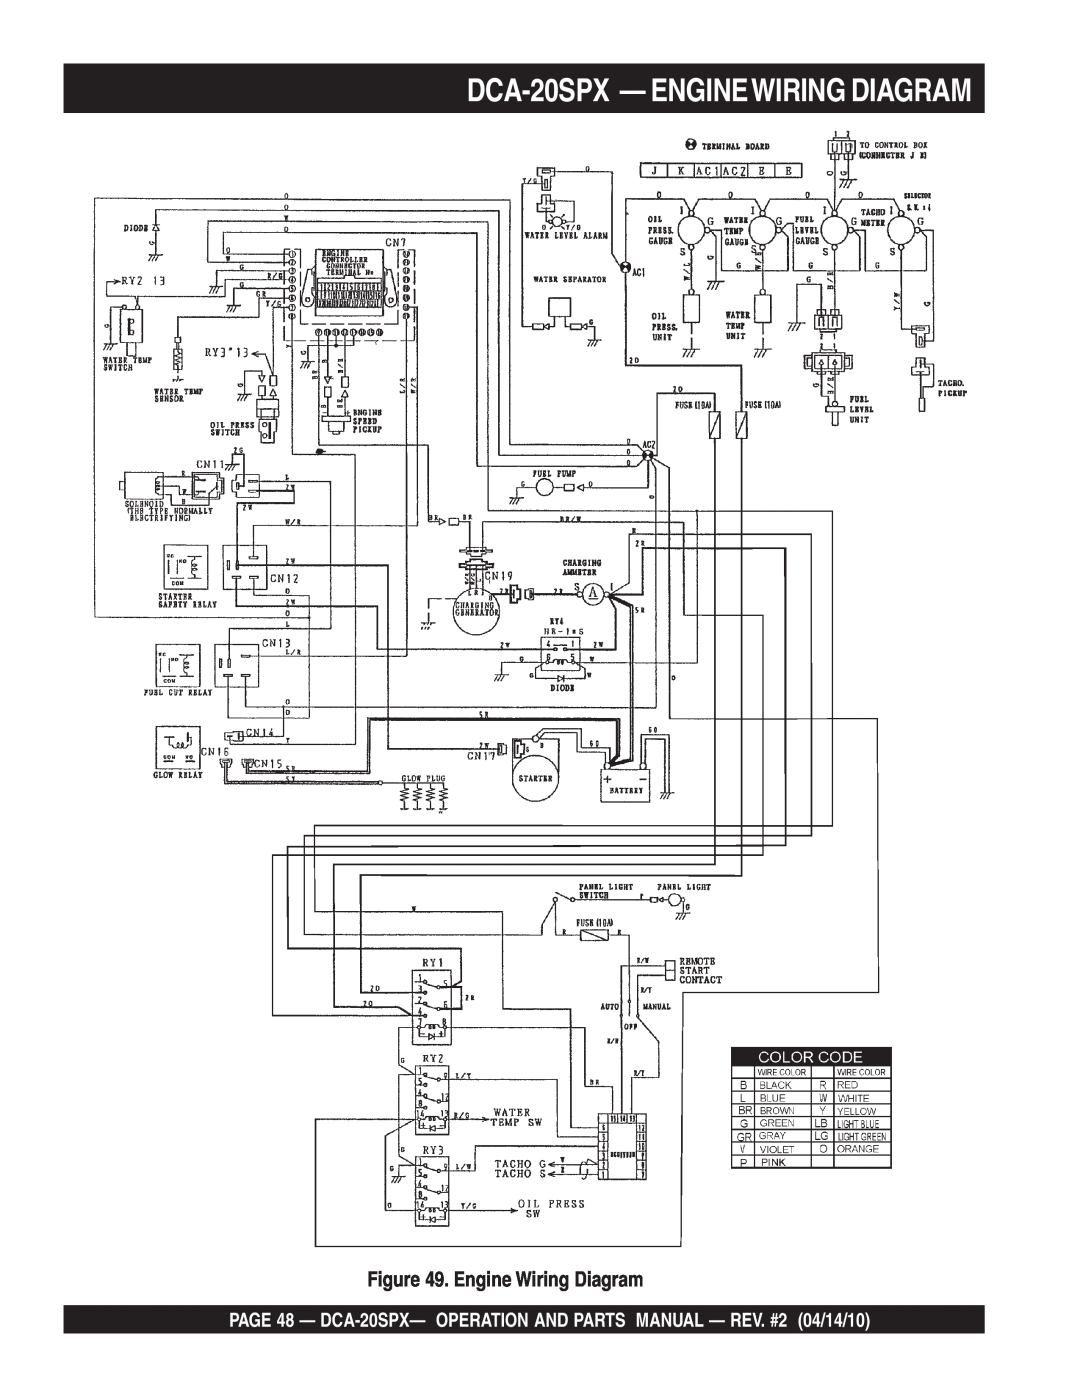 Multiquip operation manual DCA-20SPX - ENGINEWIRING DIAGRAM, Engine Wiring Diagram 